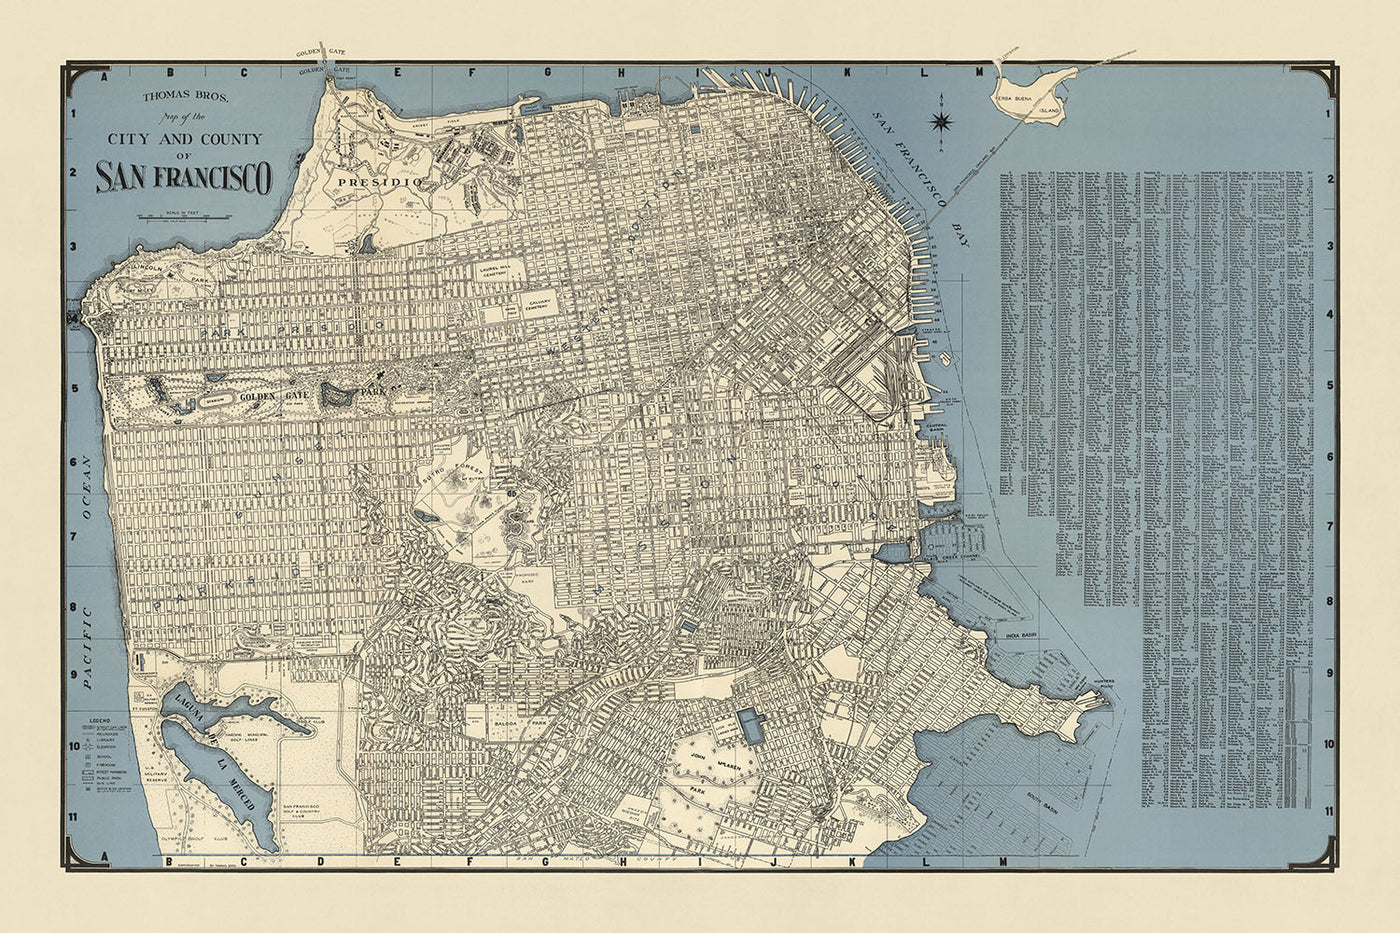 Old Street Map of San Francisco, 1938: Golden Gate Bridge, Chinatown, Presidio, Fisherman's Wharf, Fort Mason